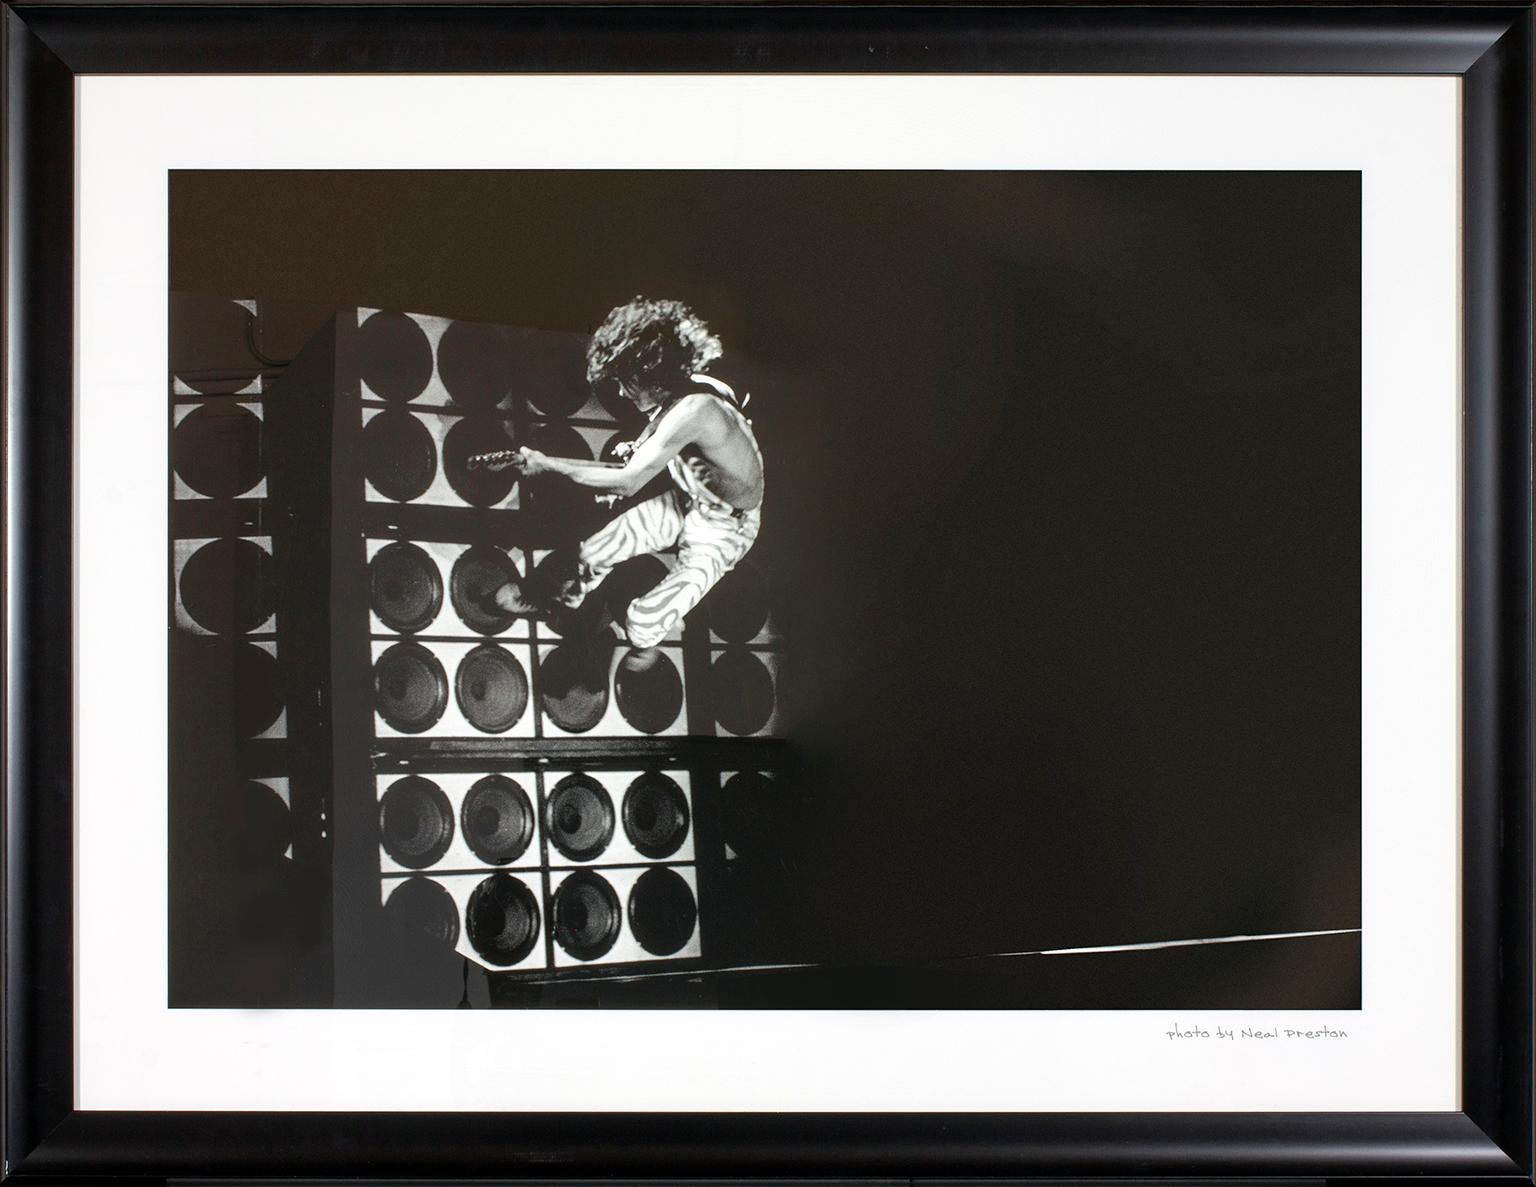 "Eddie Van Halen Wall Jump" photograph by Neal Preston from Hard Rock Hotel 